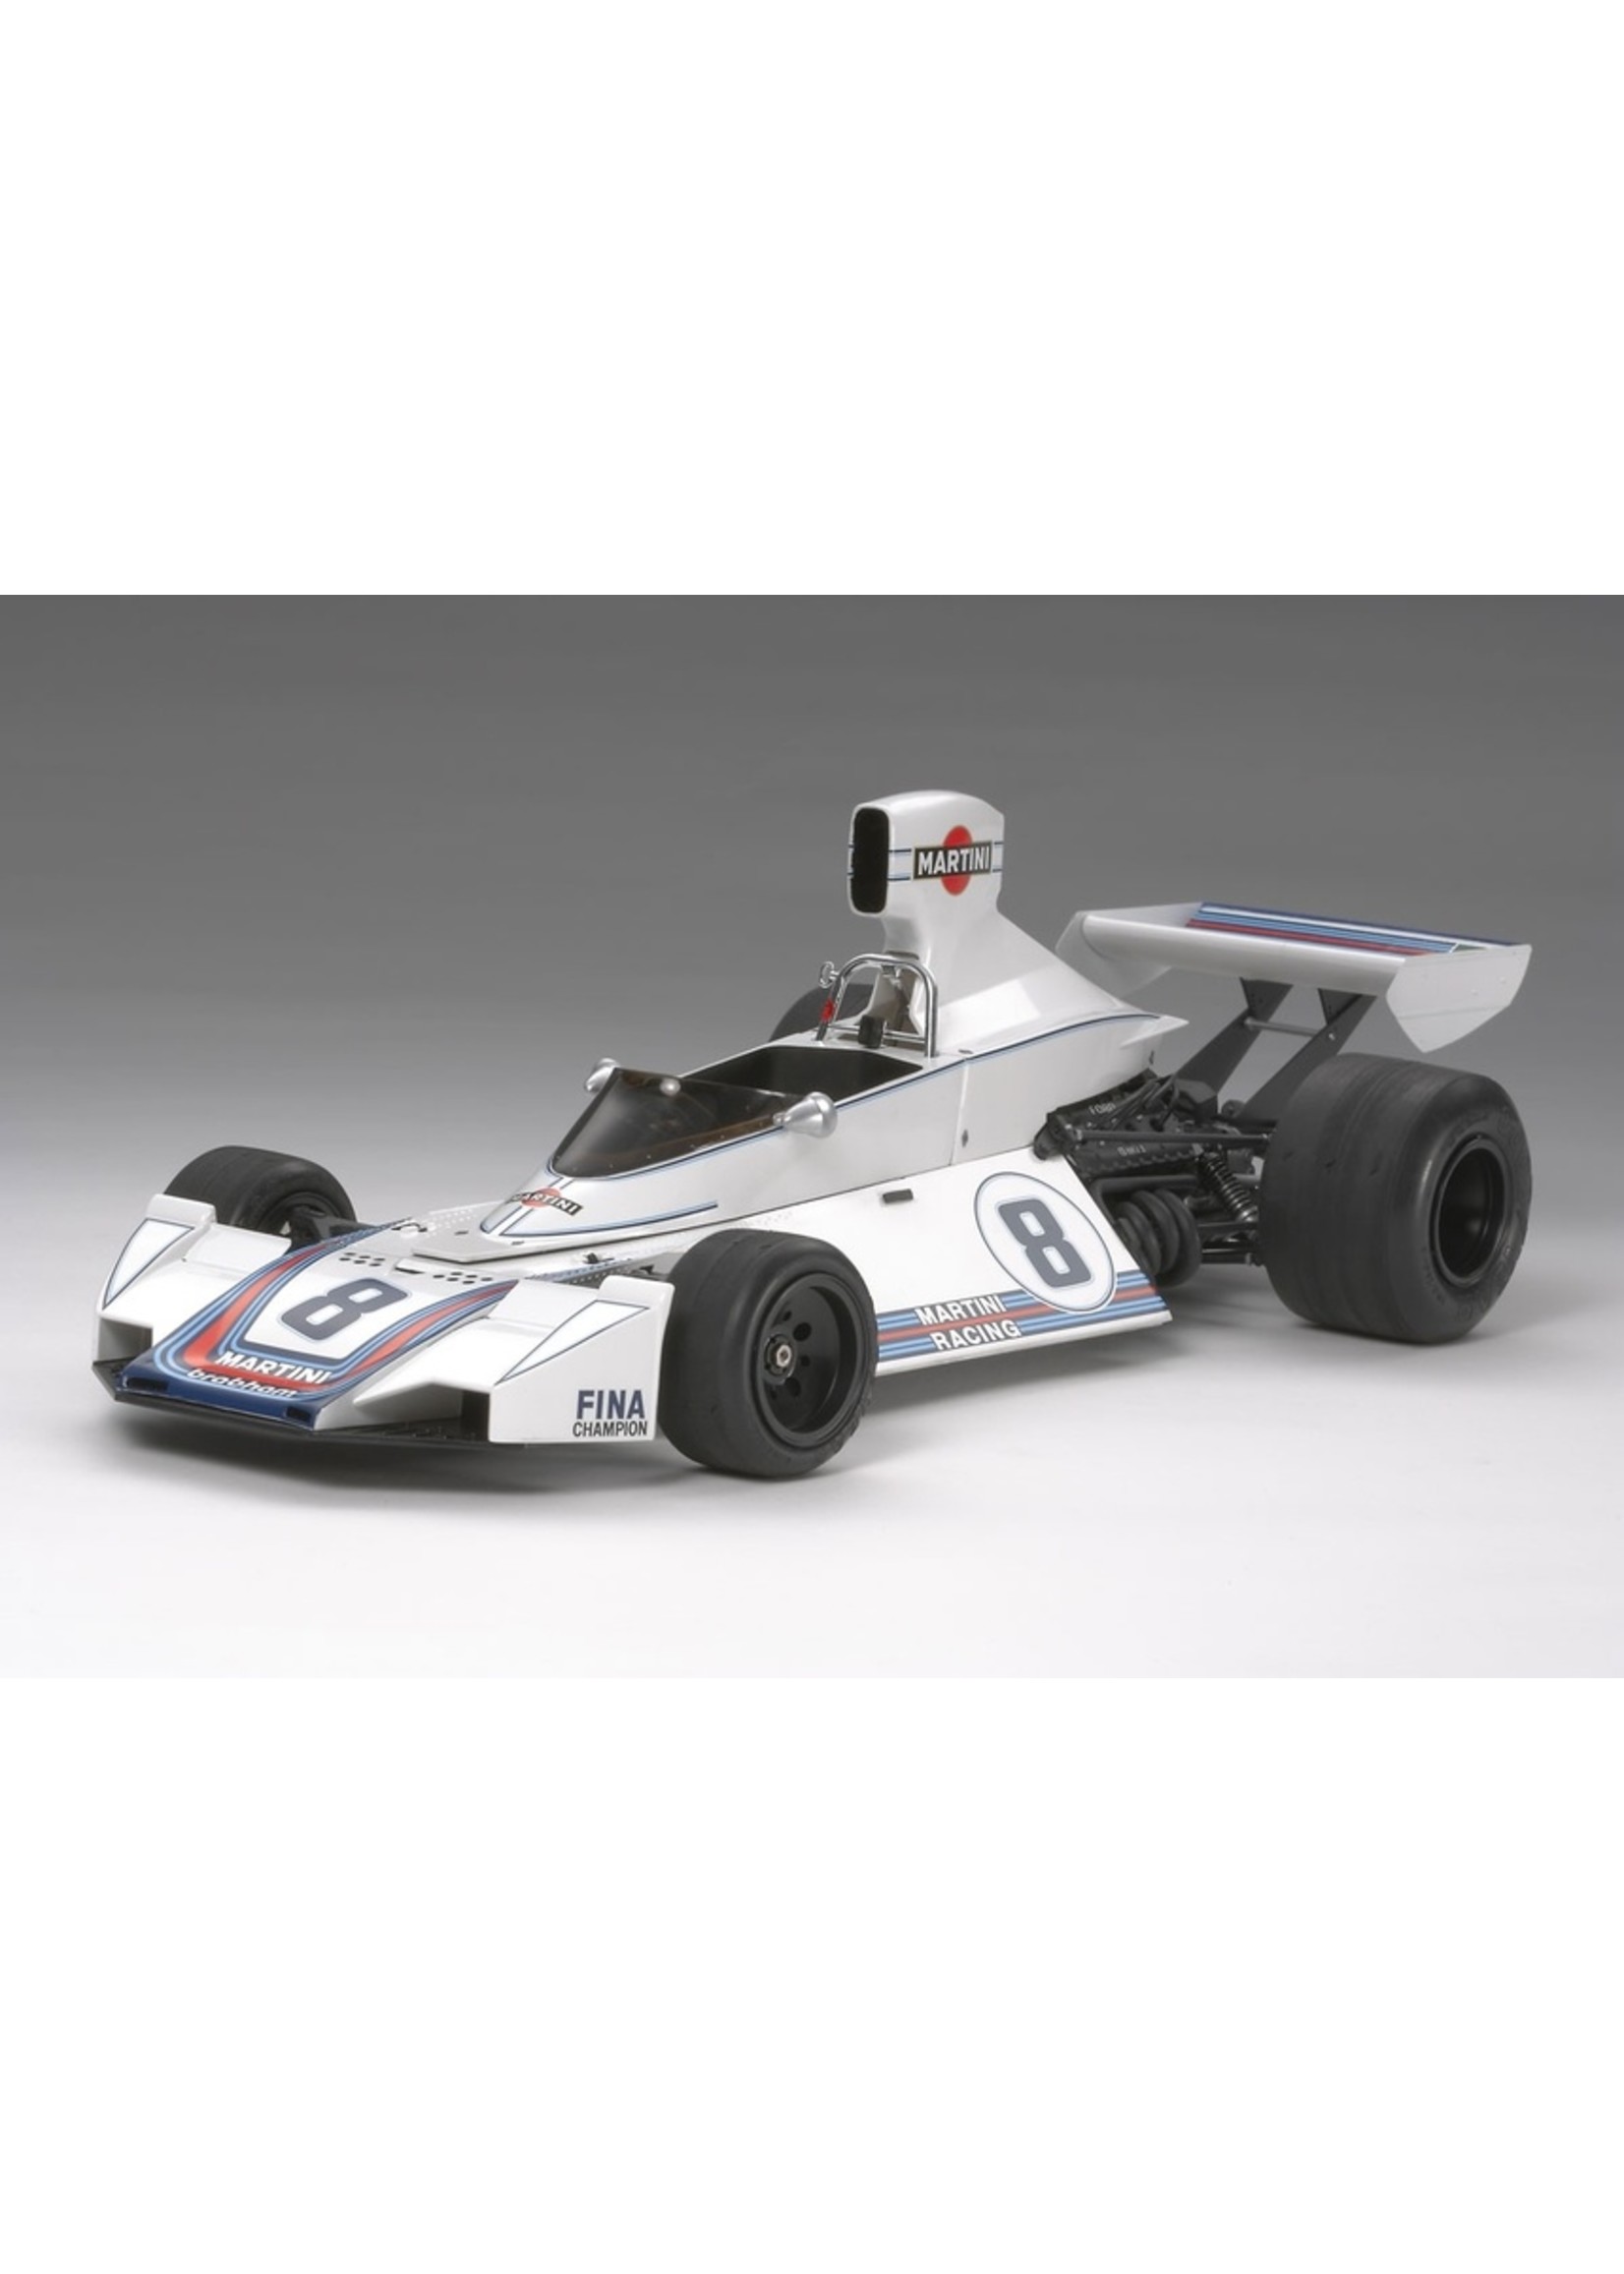 Martini Brabham F1 Car 